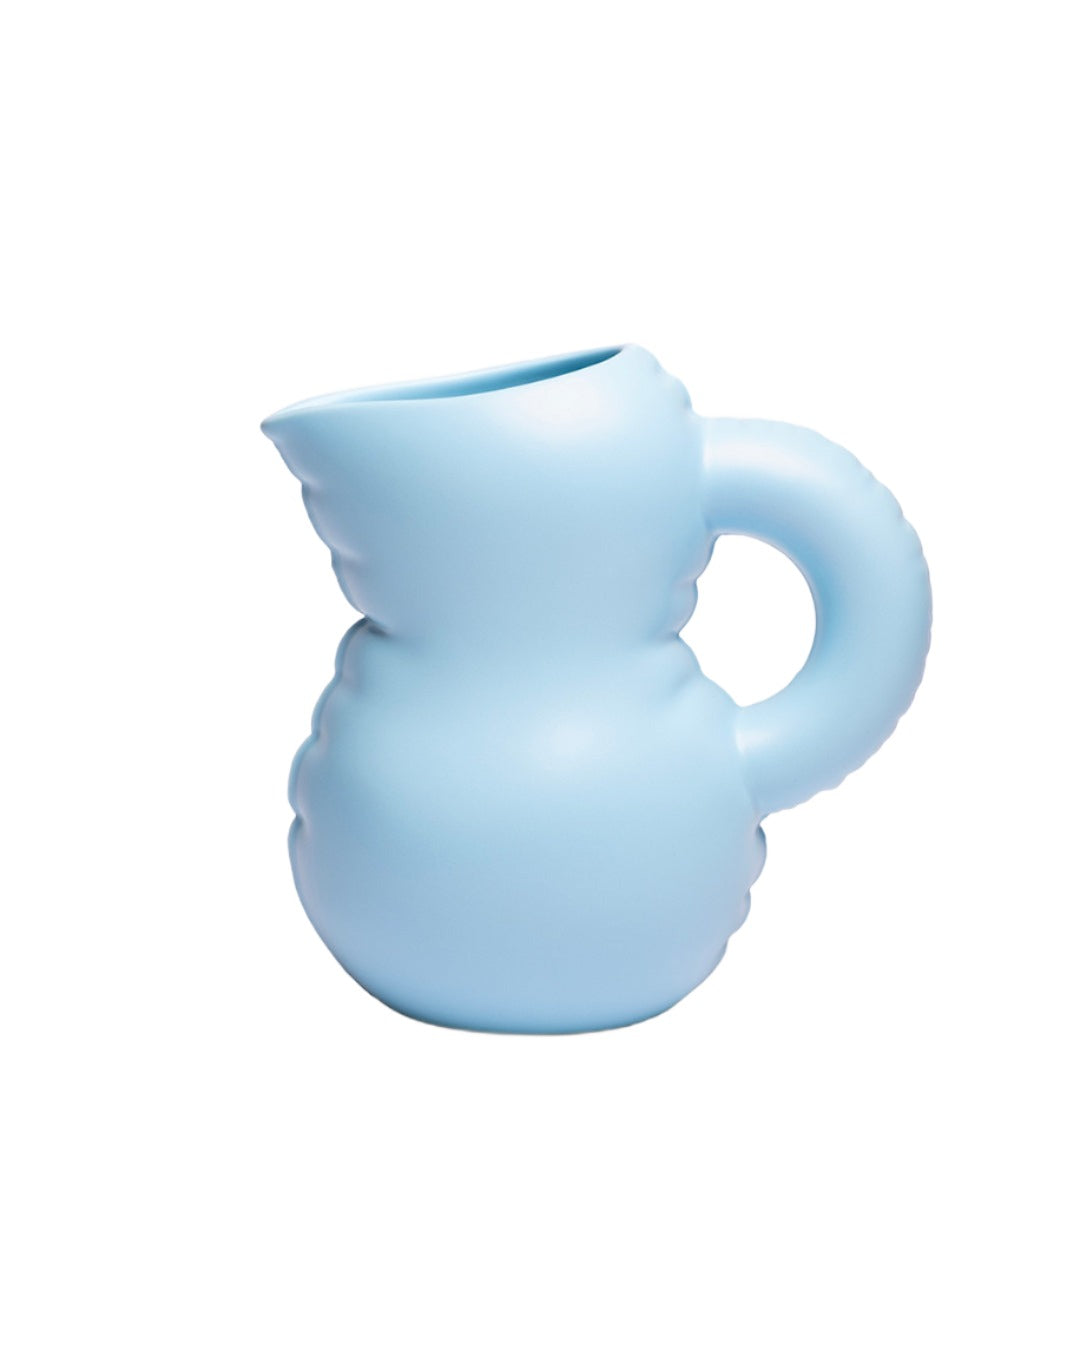 Home-Studyo - Handamde ceramic jug